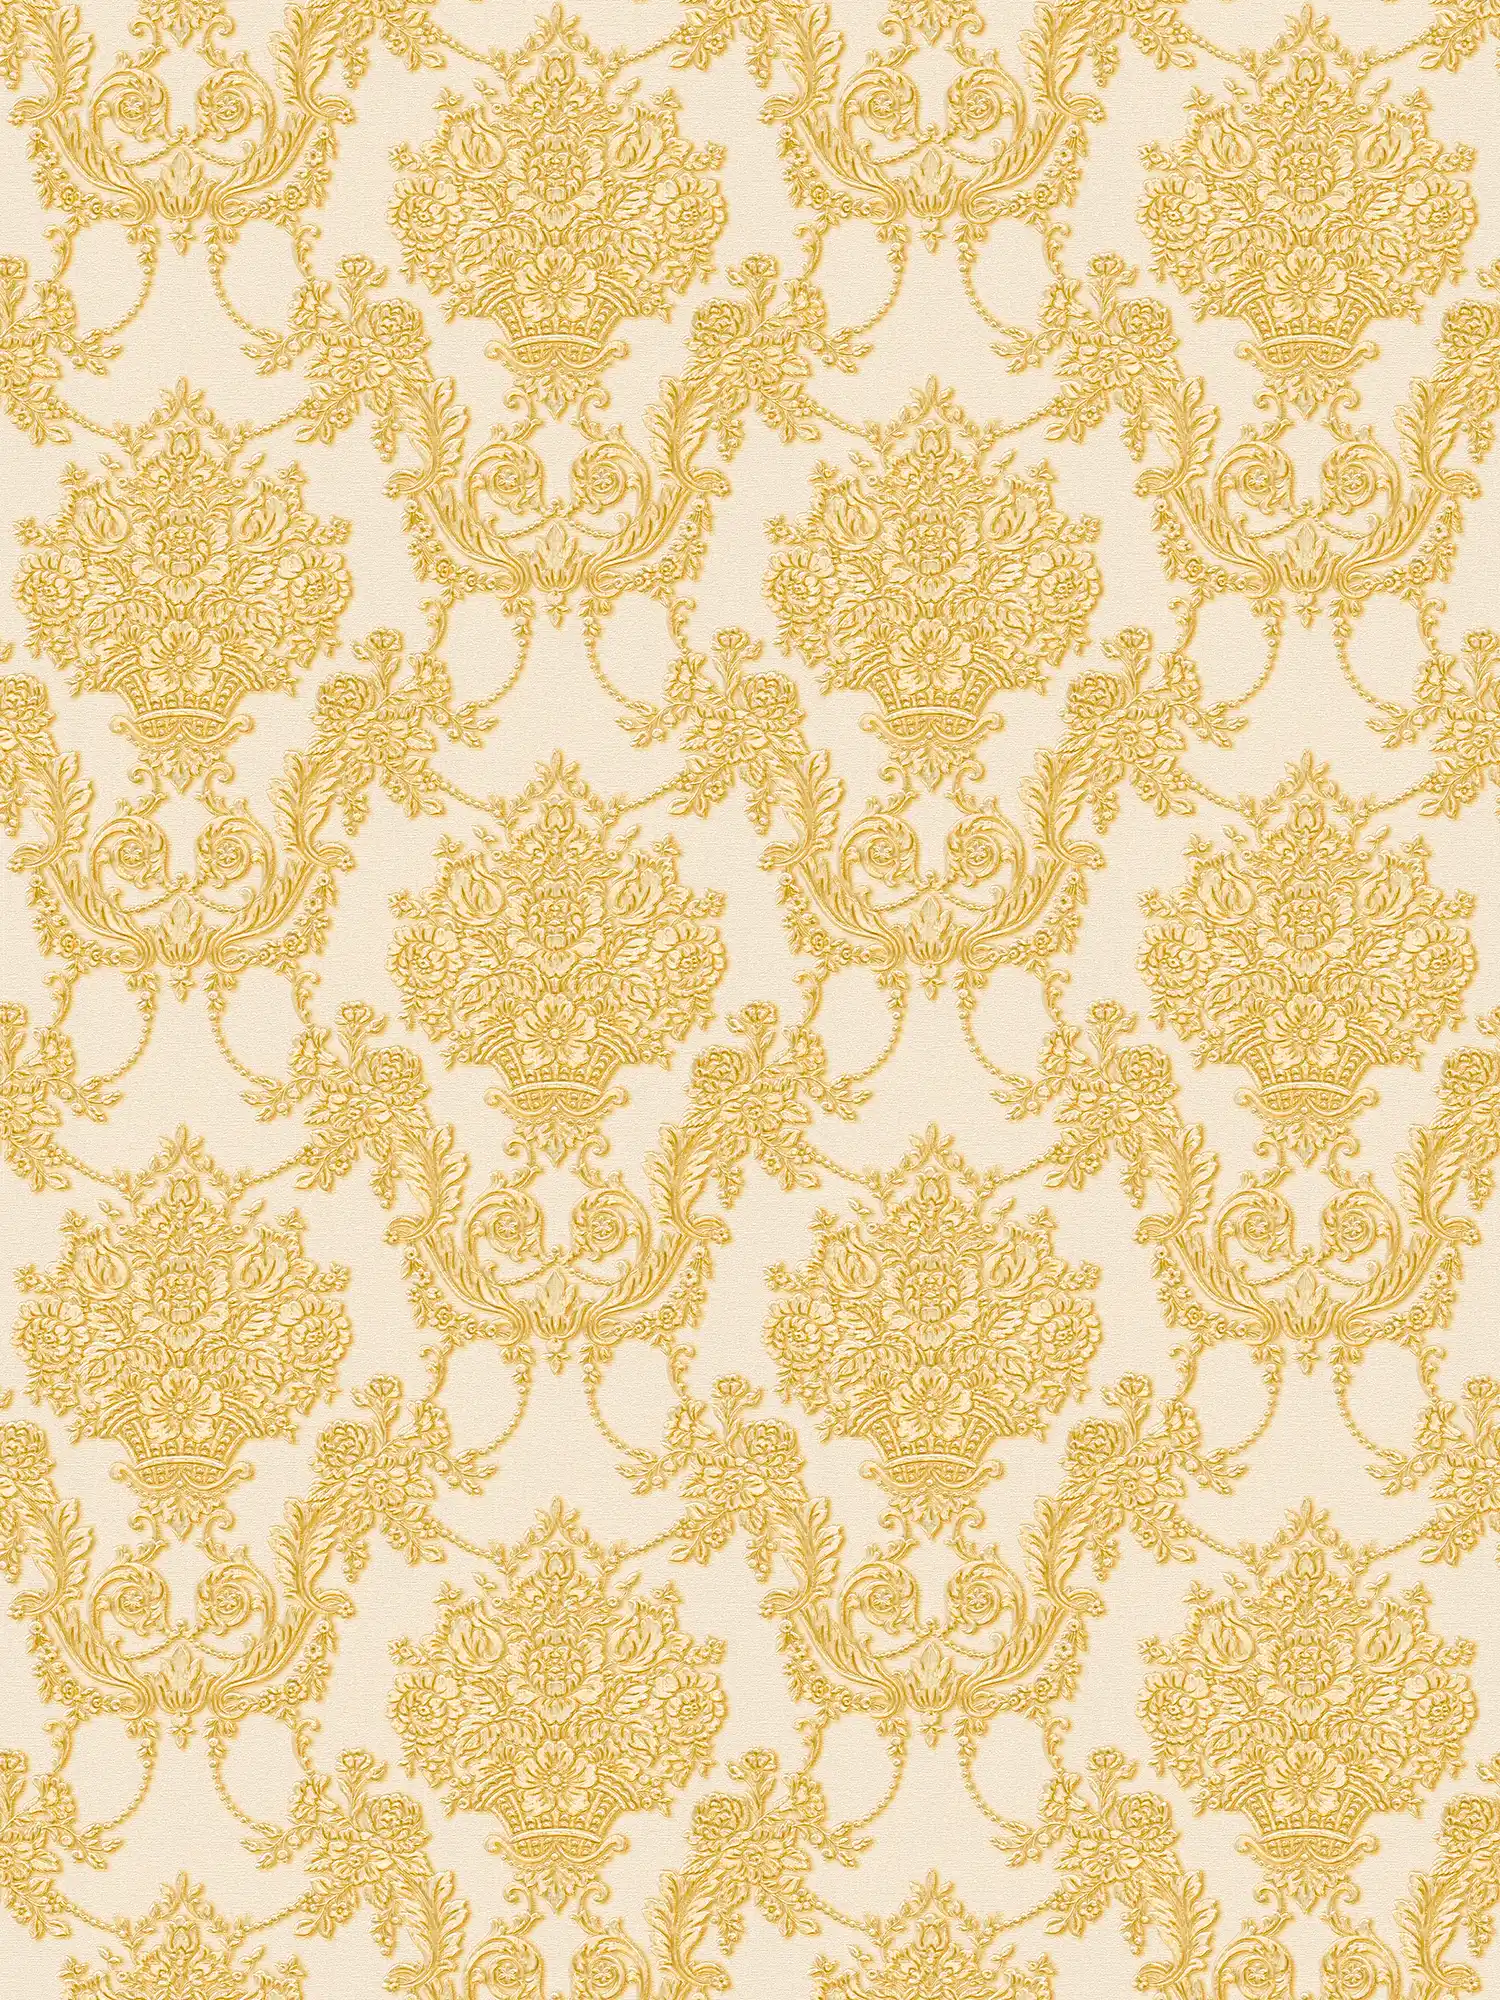 Golden baroque wallpaper with floral pattern - cream, metallic
